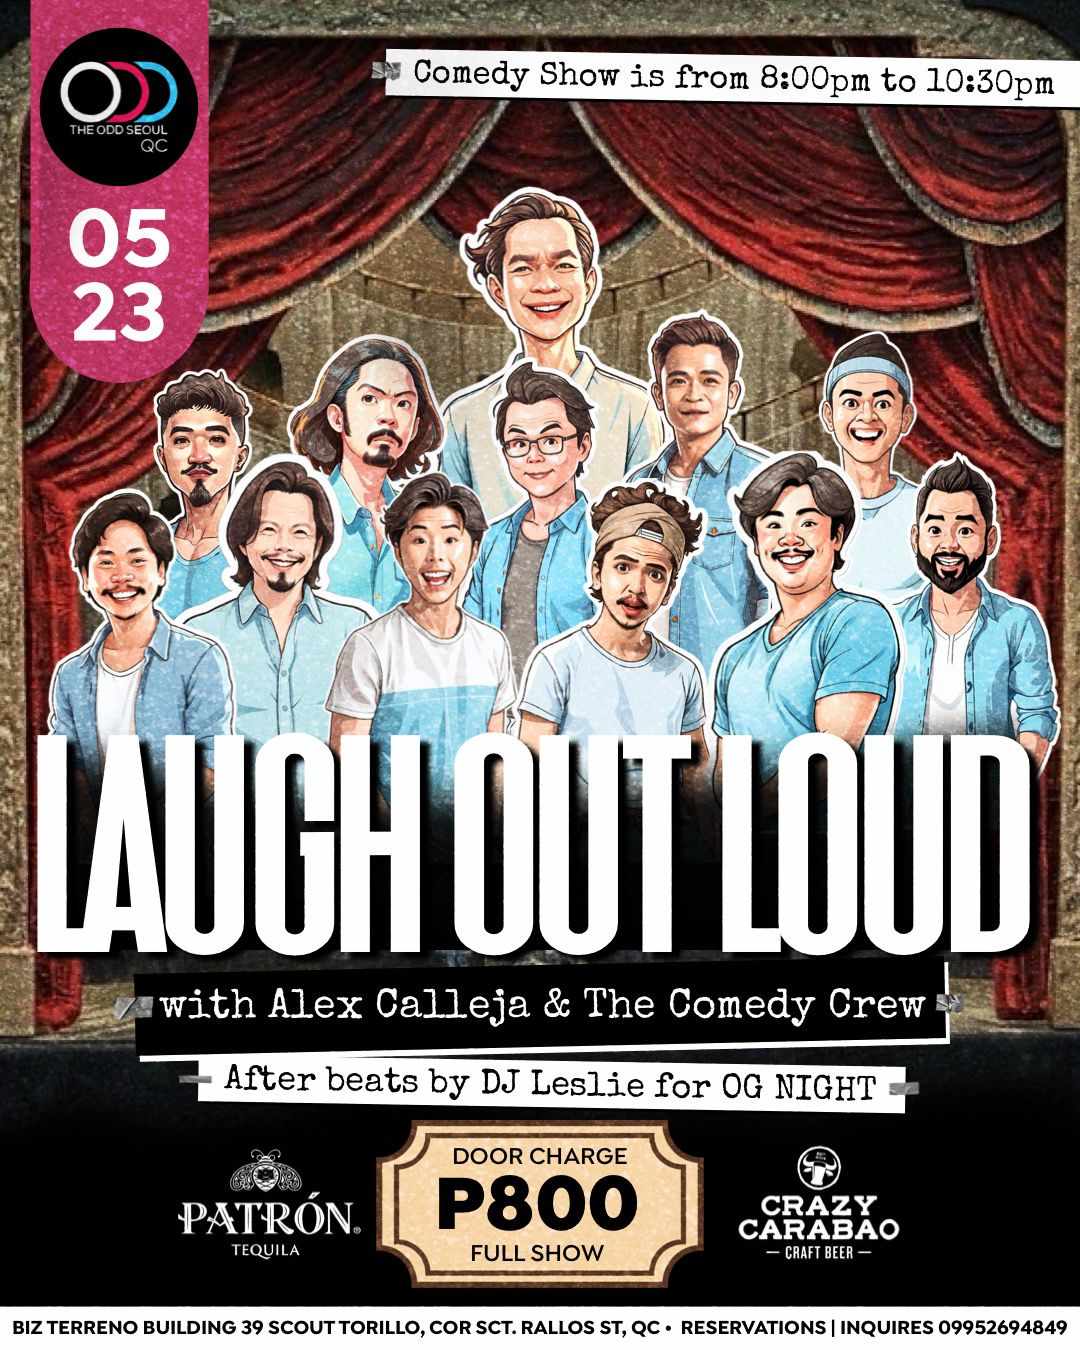 stand up comedy show odd seoul